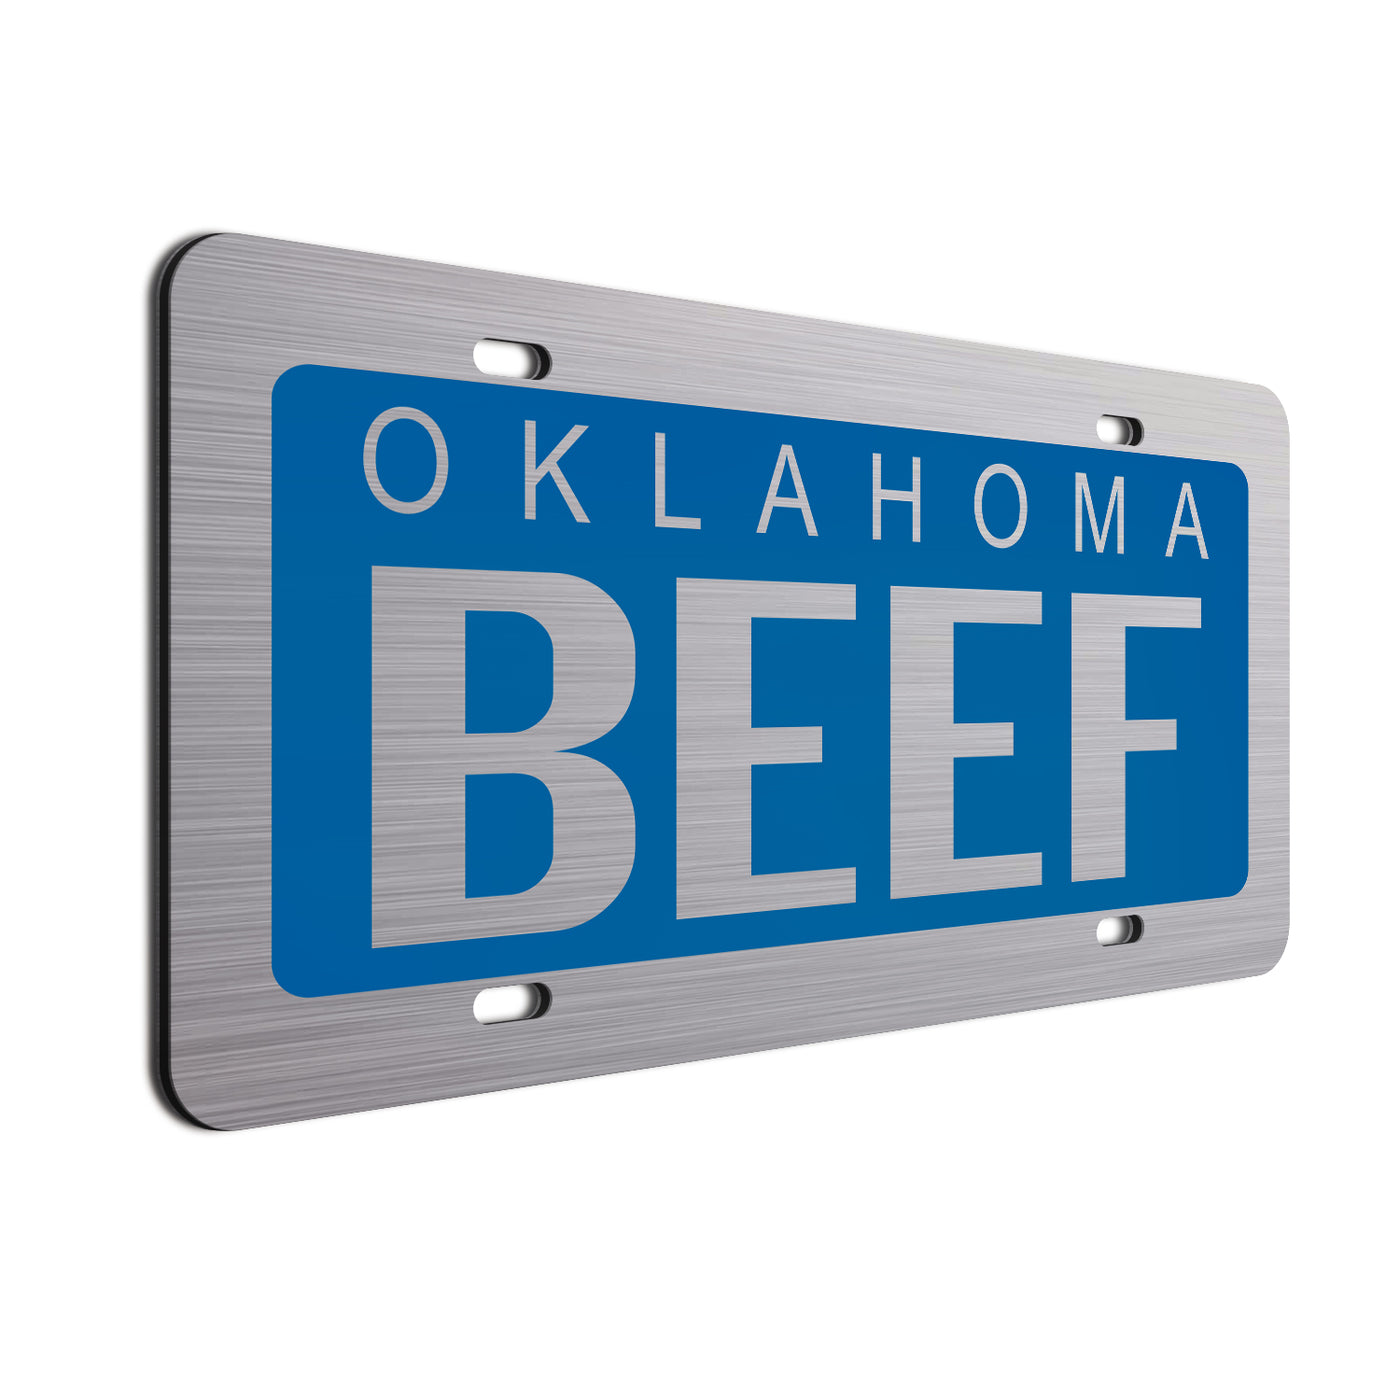 Oklahoma Beef Car License Plate Blue